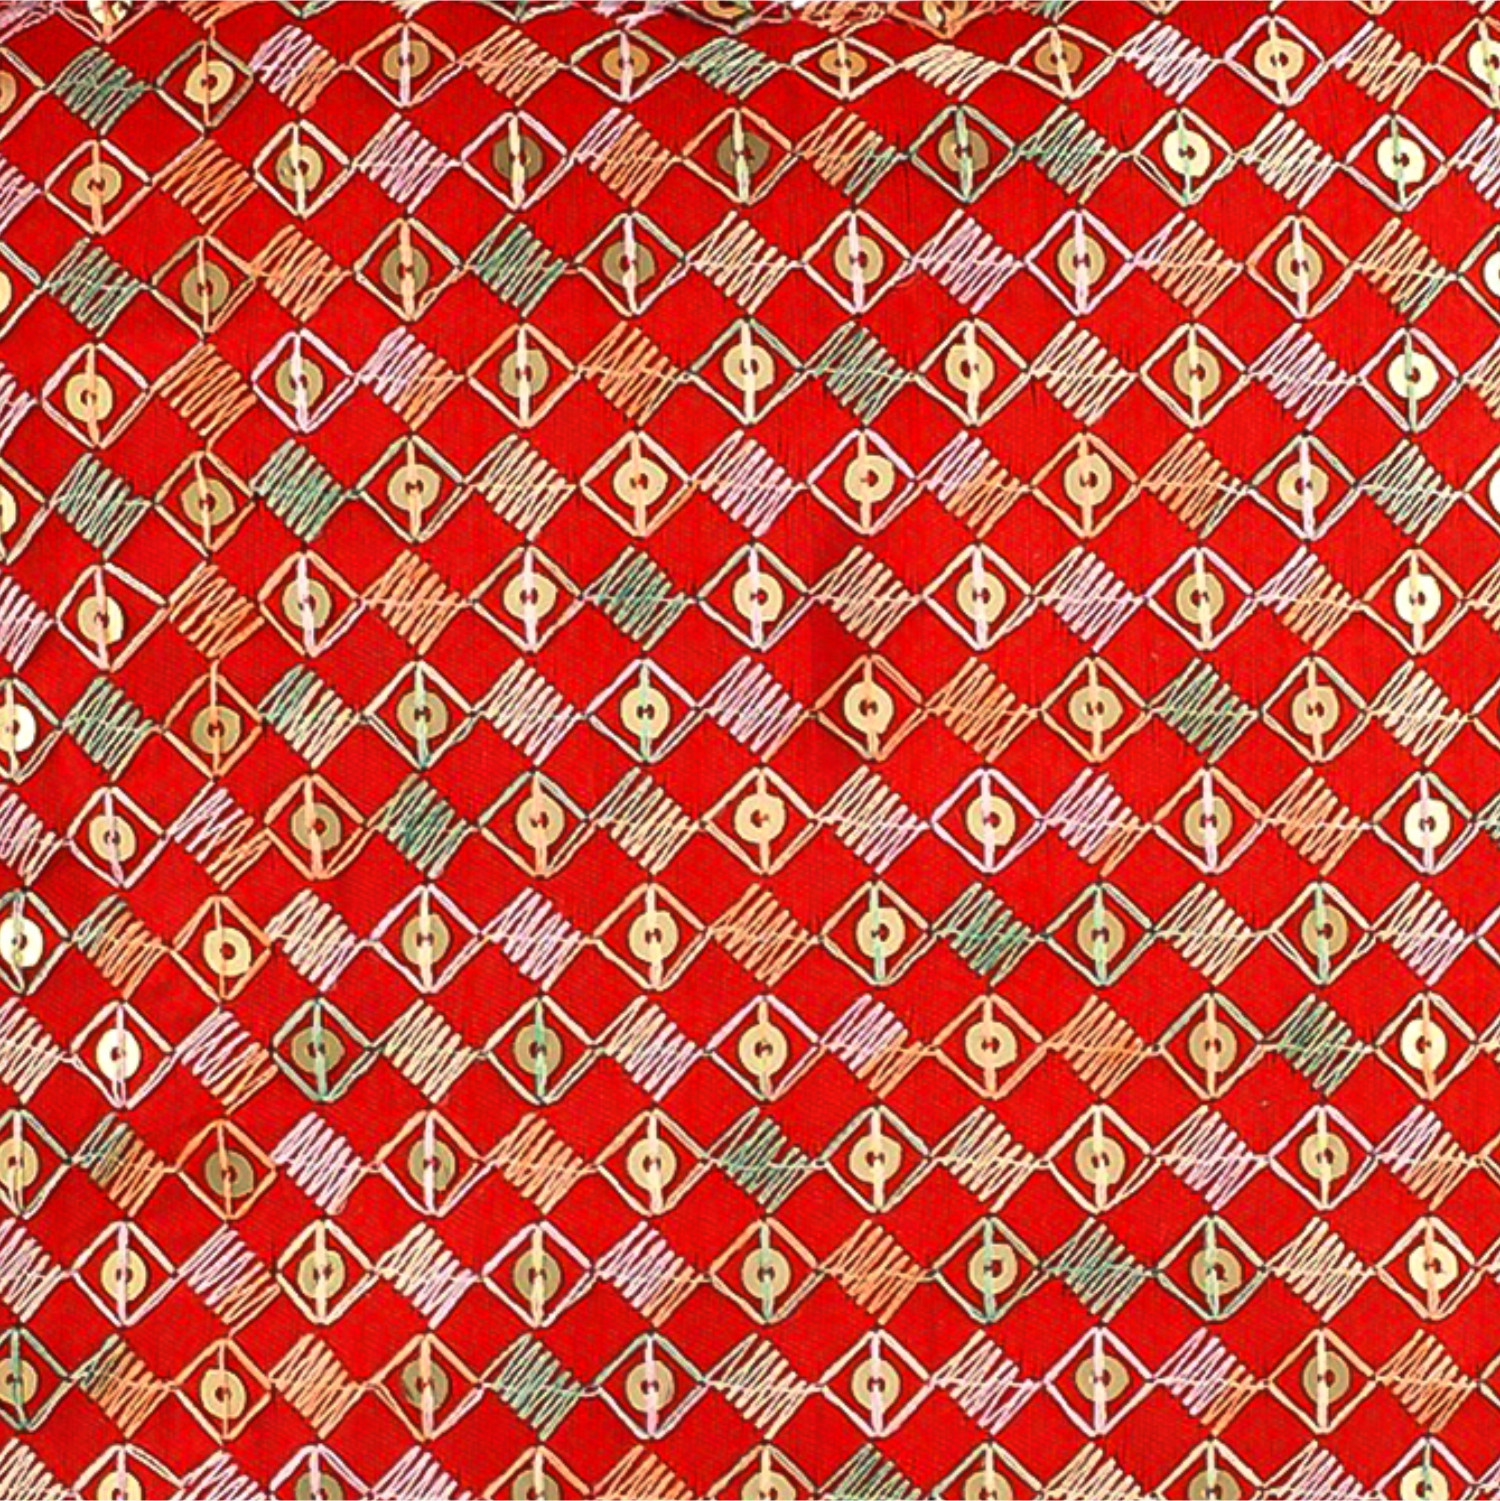 Kuber Industries Potli | Silk Wedding Potli | Wallet Potli | Christmas Gift Potli | Baby Shower Potli | Traditional Embroidery Potli | Shagun Potli | Double Handle Zip-Potli | Red